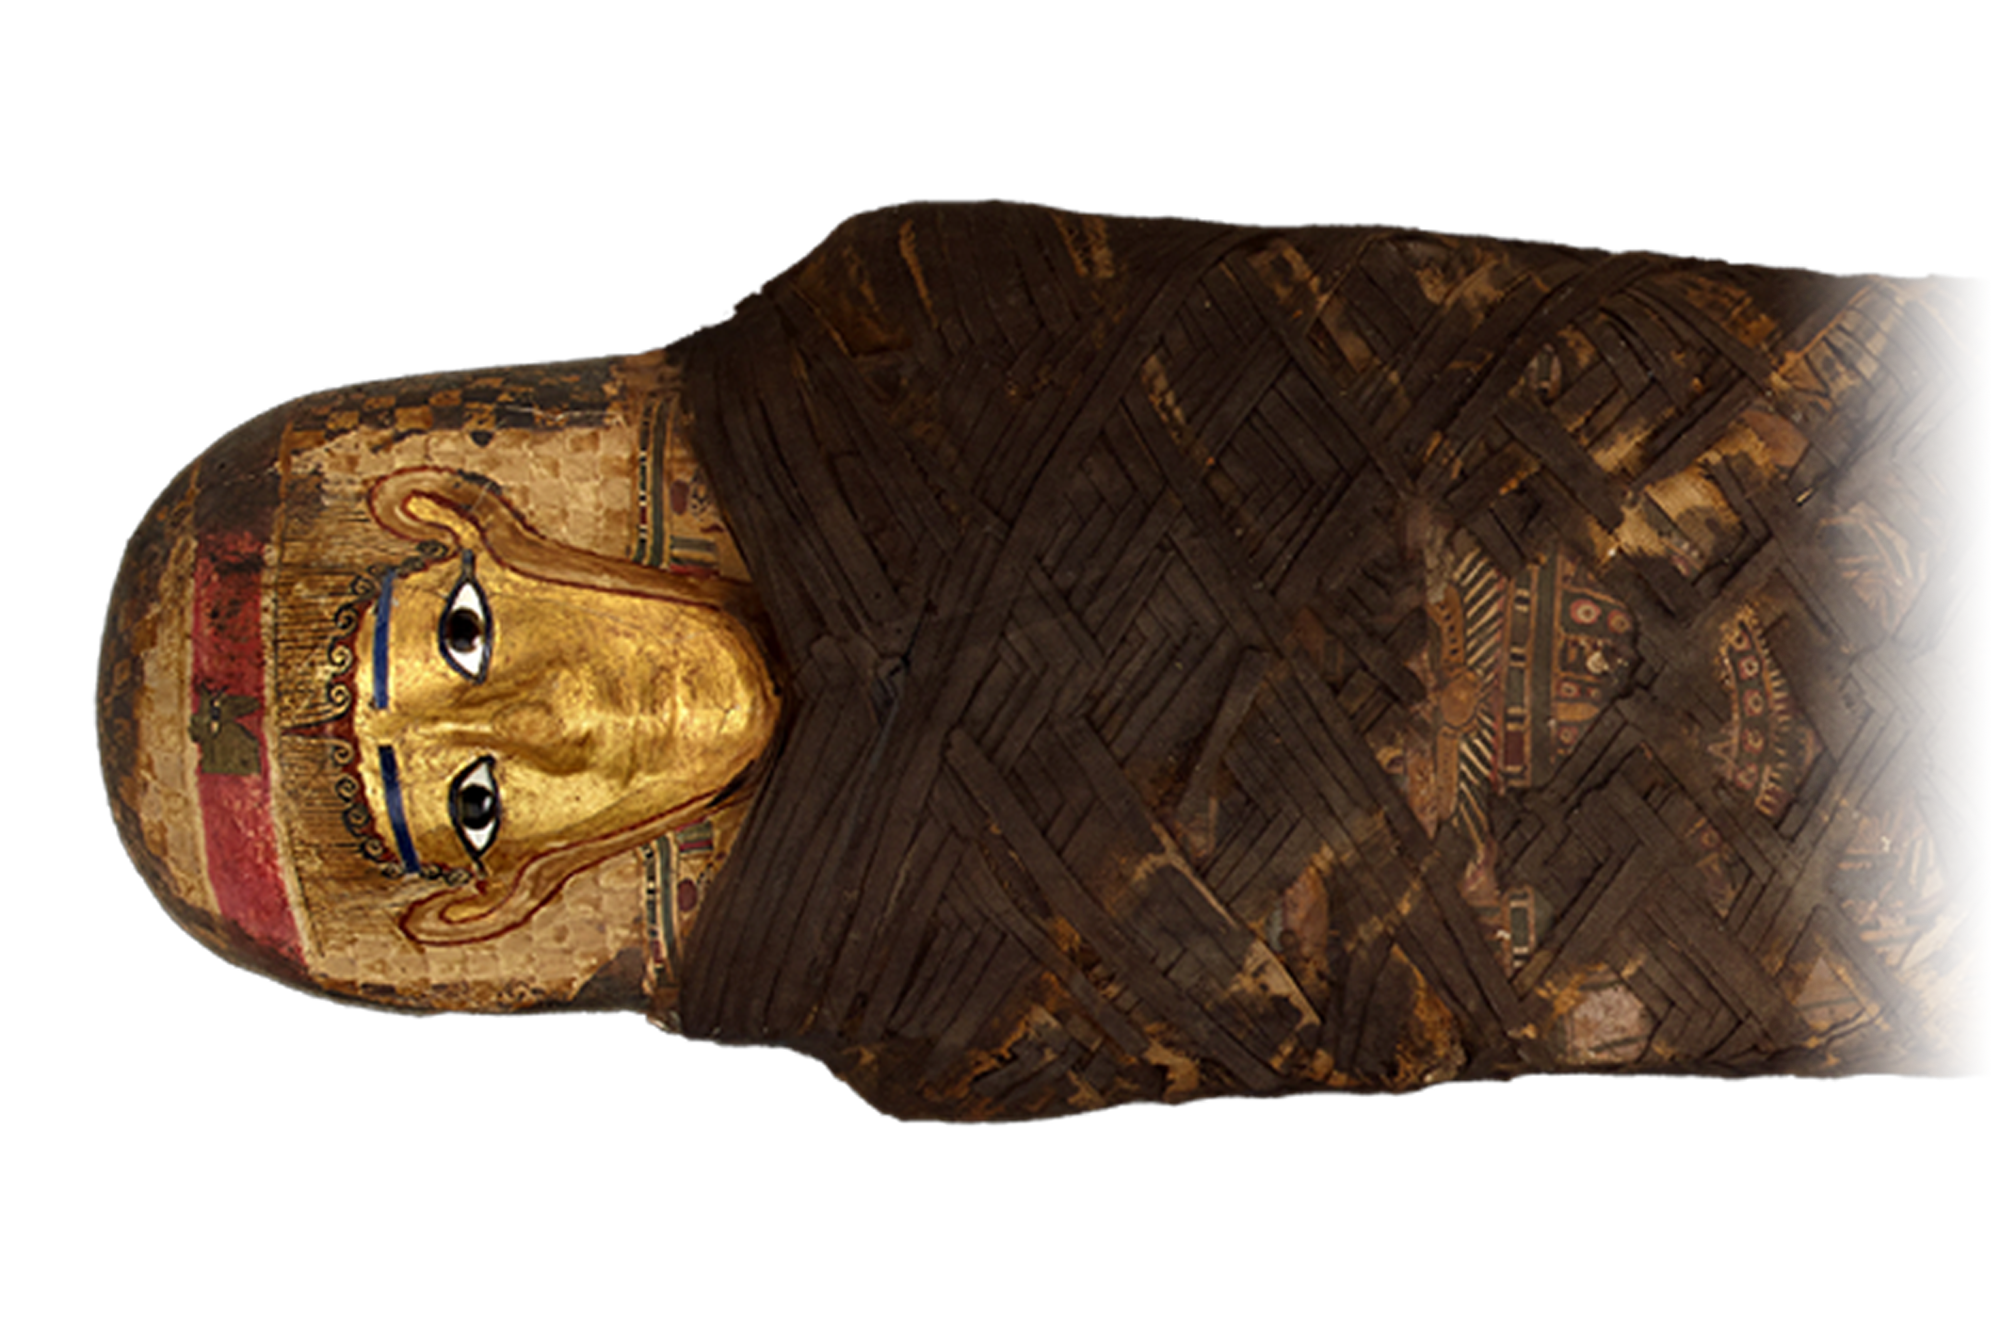 mummies1.png